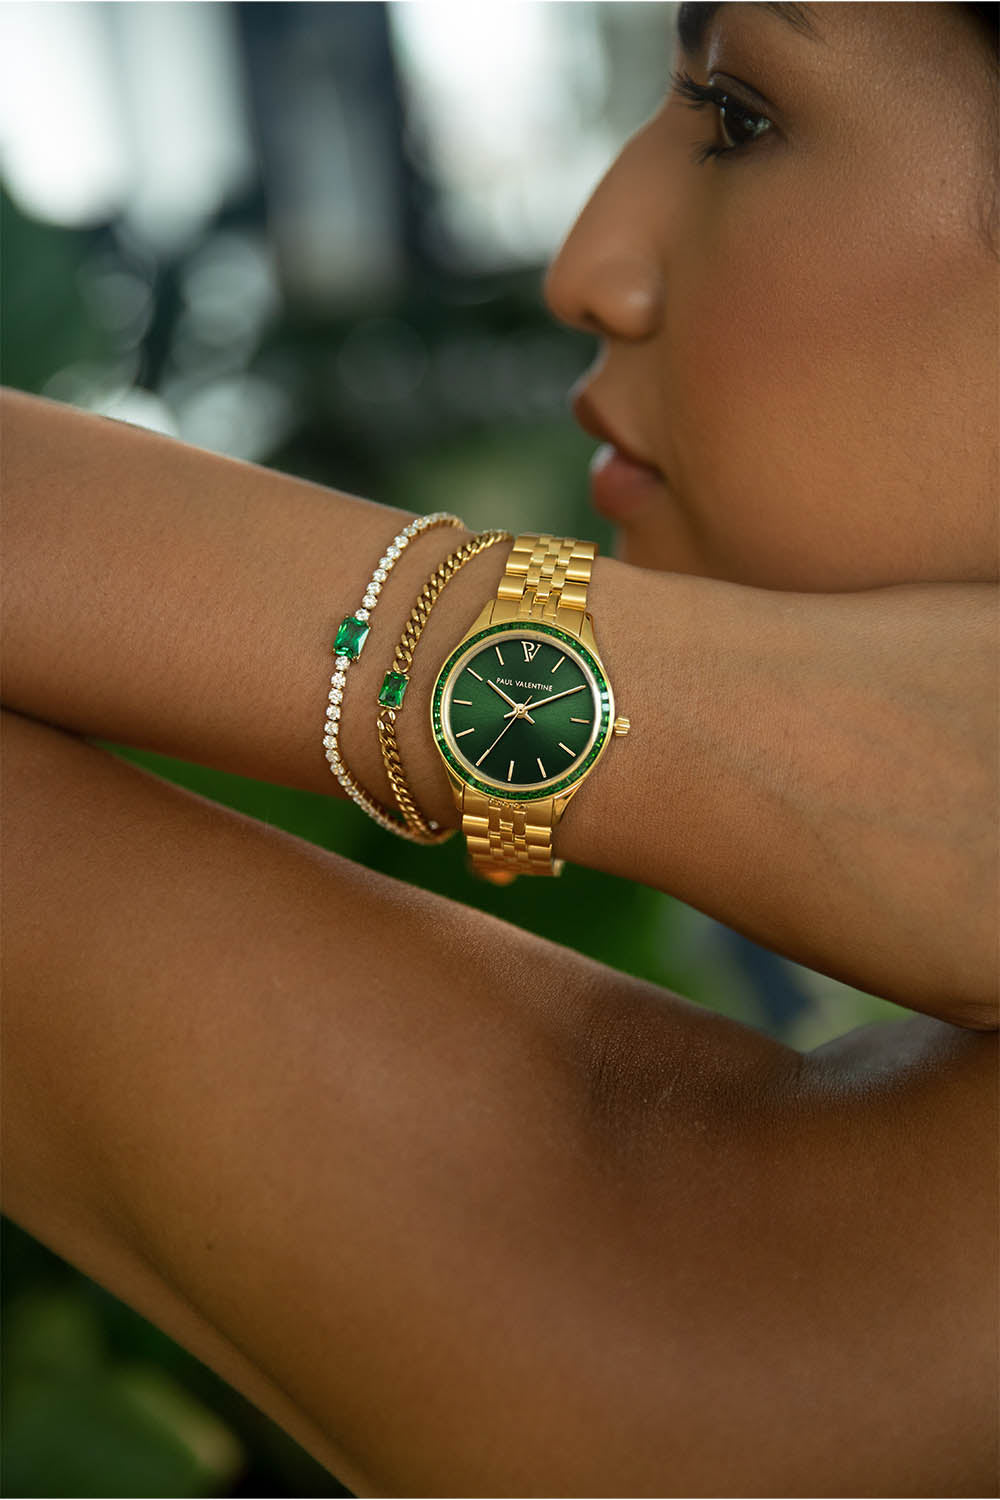 Green Emerald Tennis Bracelet